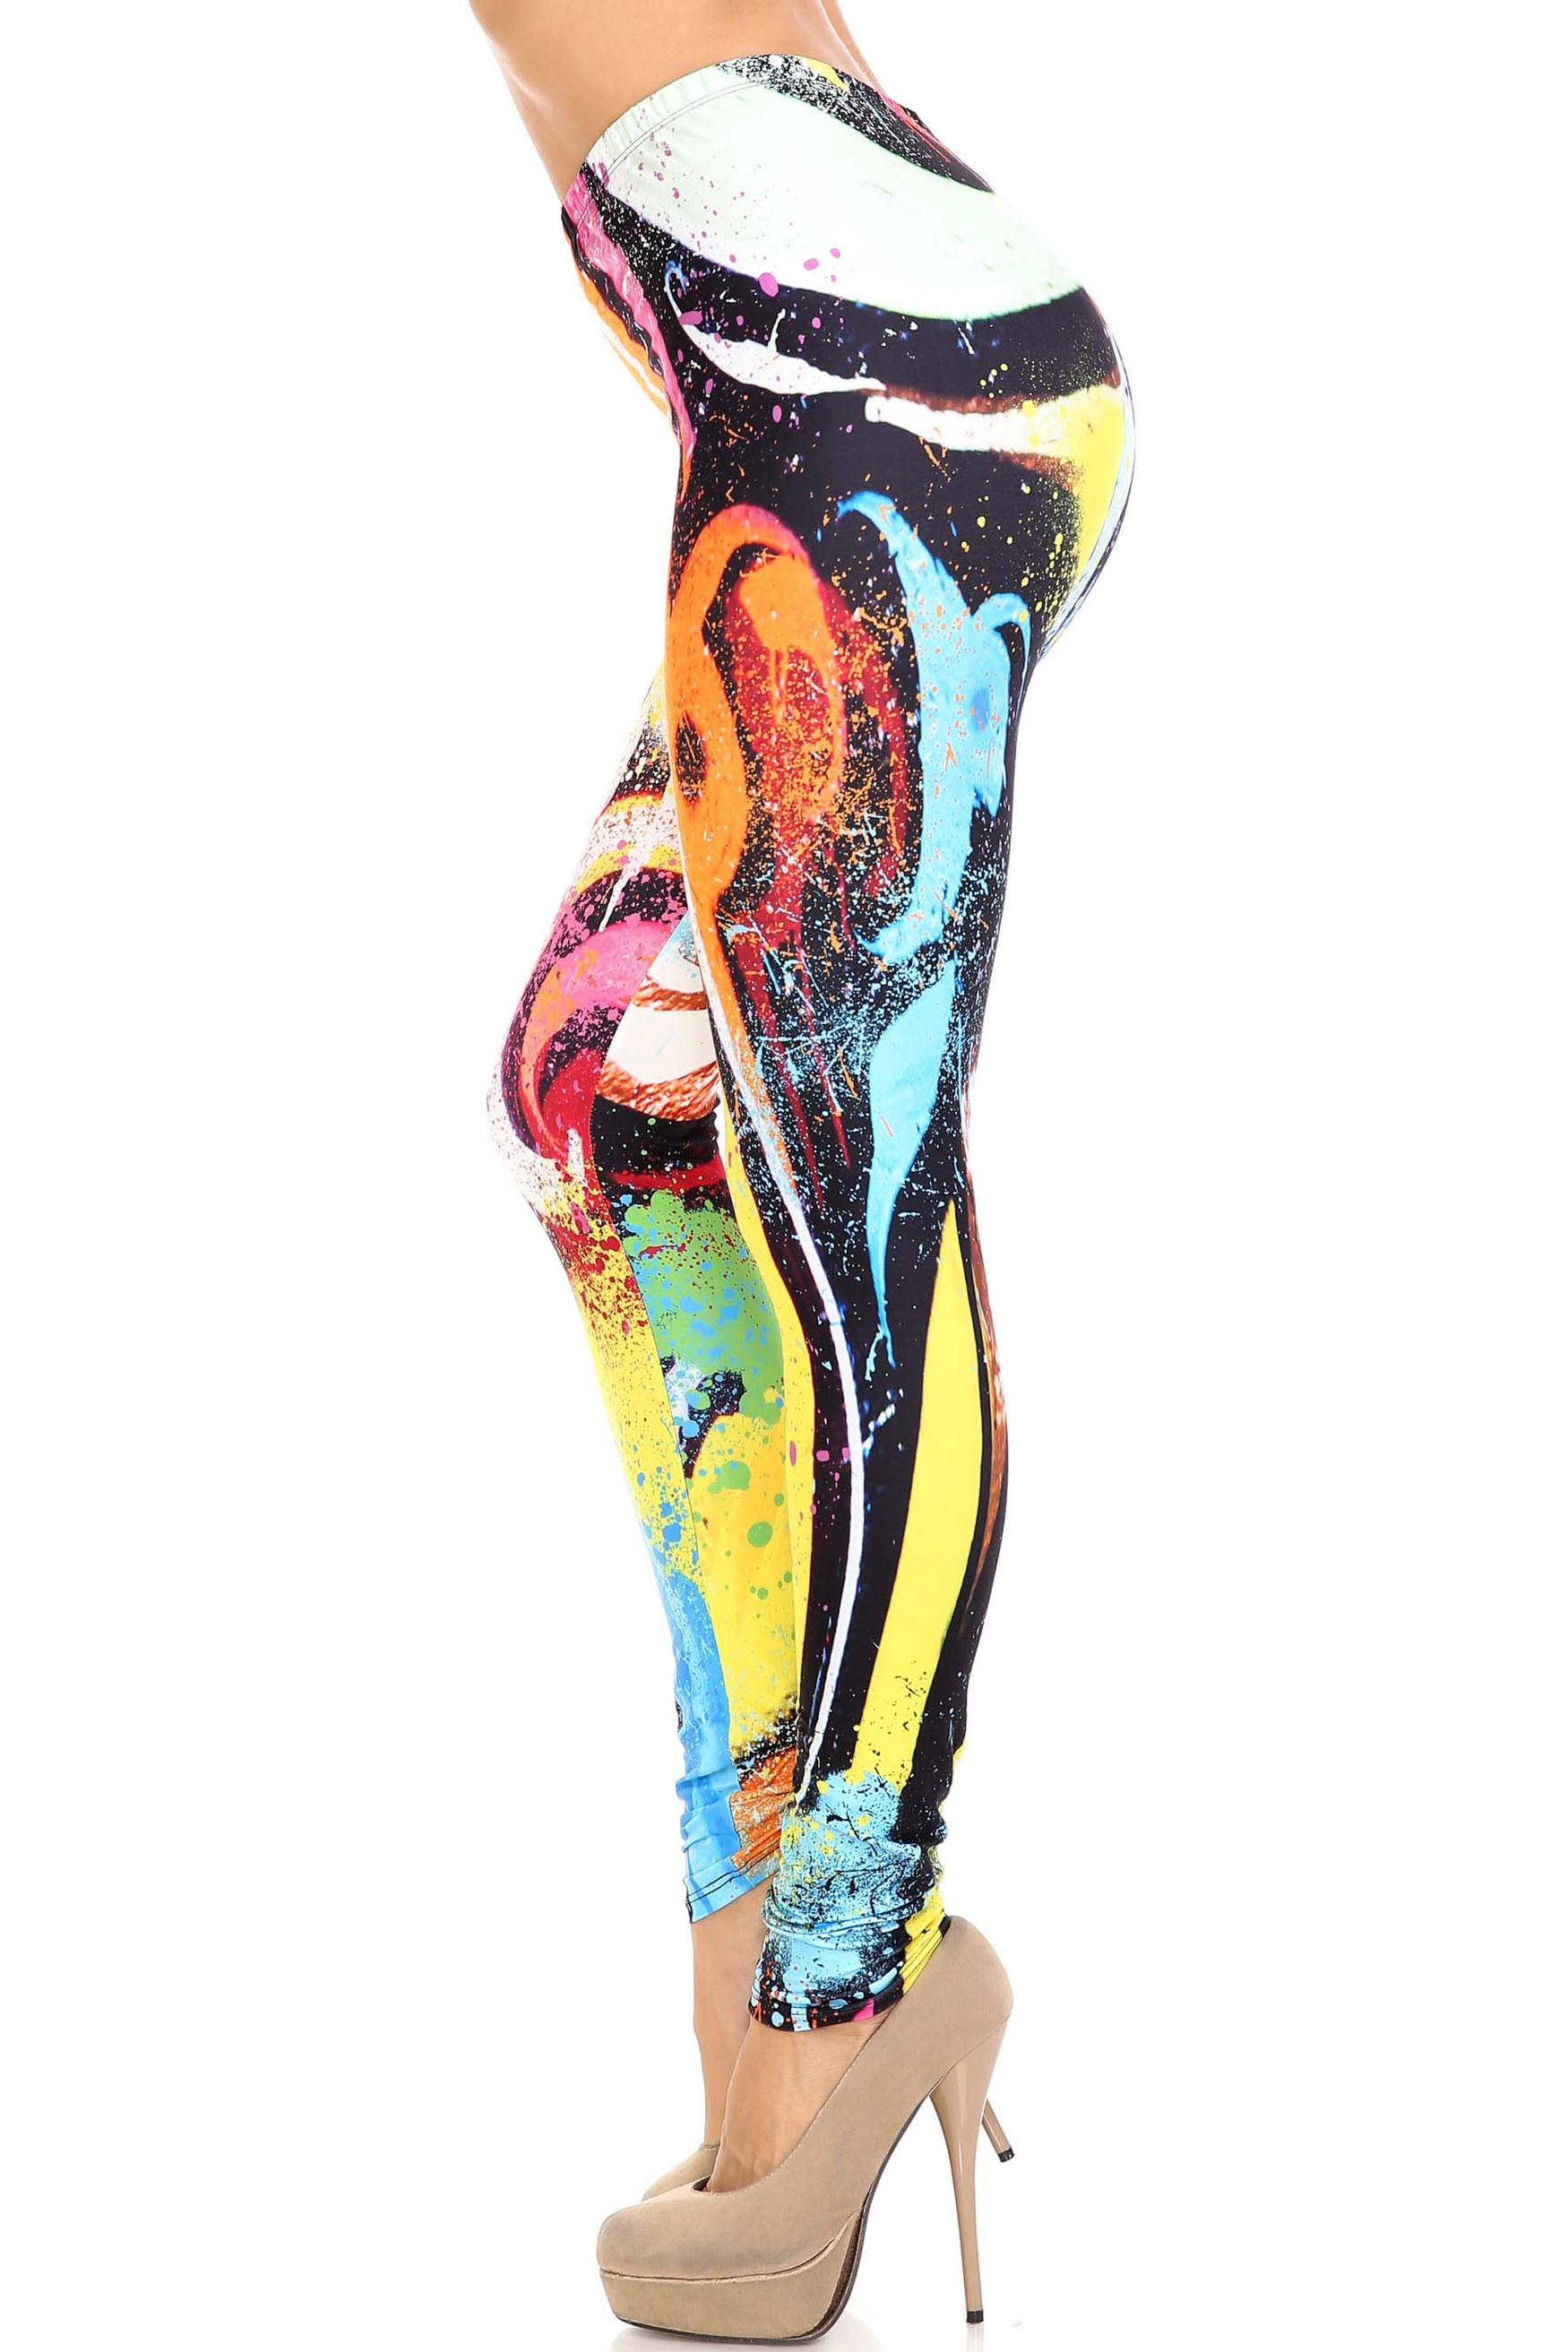 Creamy Soft Colorful Paint Strokes Extra Plus Size Leggings - 3X-5X - USA Fashion™